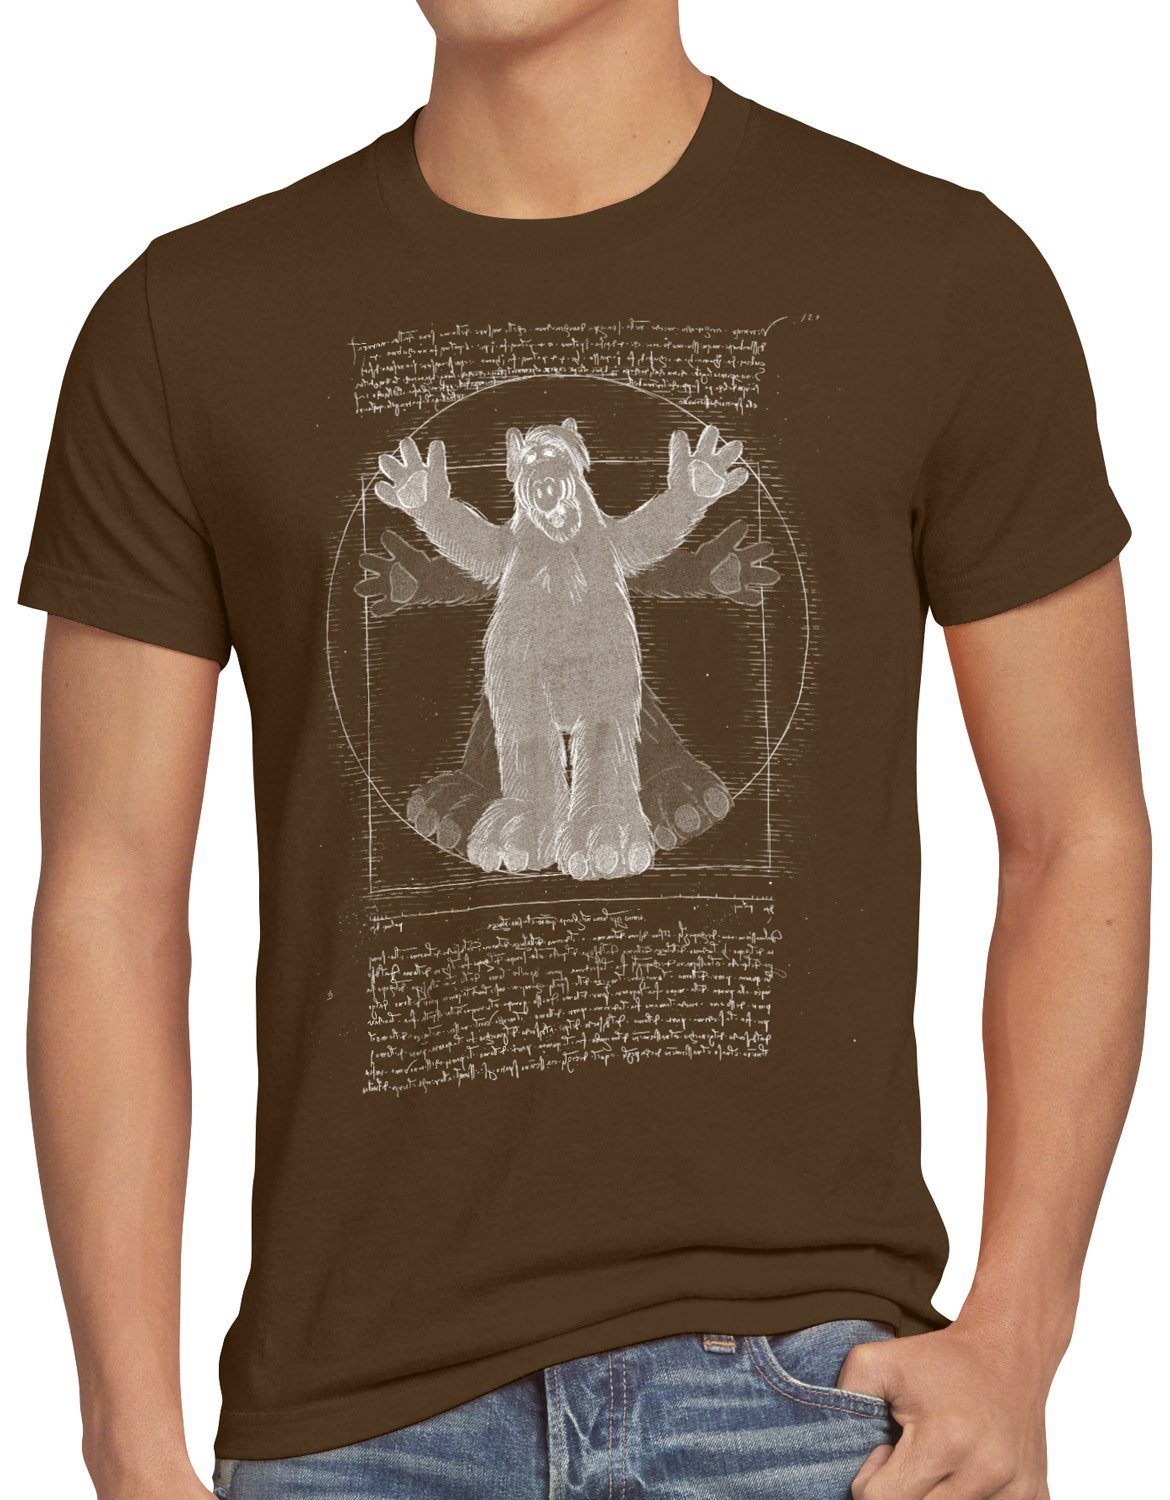 tv Herren shumway Virtuvianischer T-Shirt Alf gordon melmac braun style3 Print-Shirt